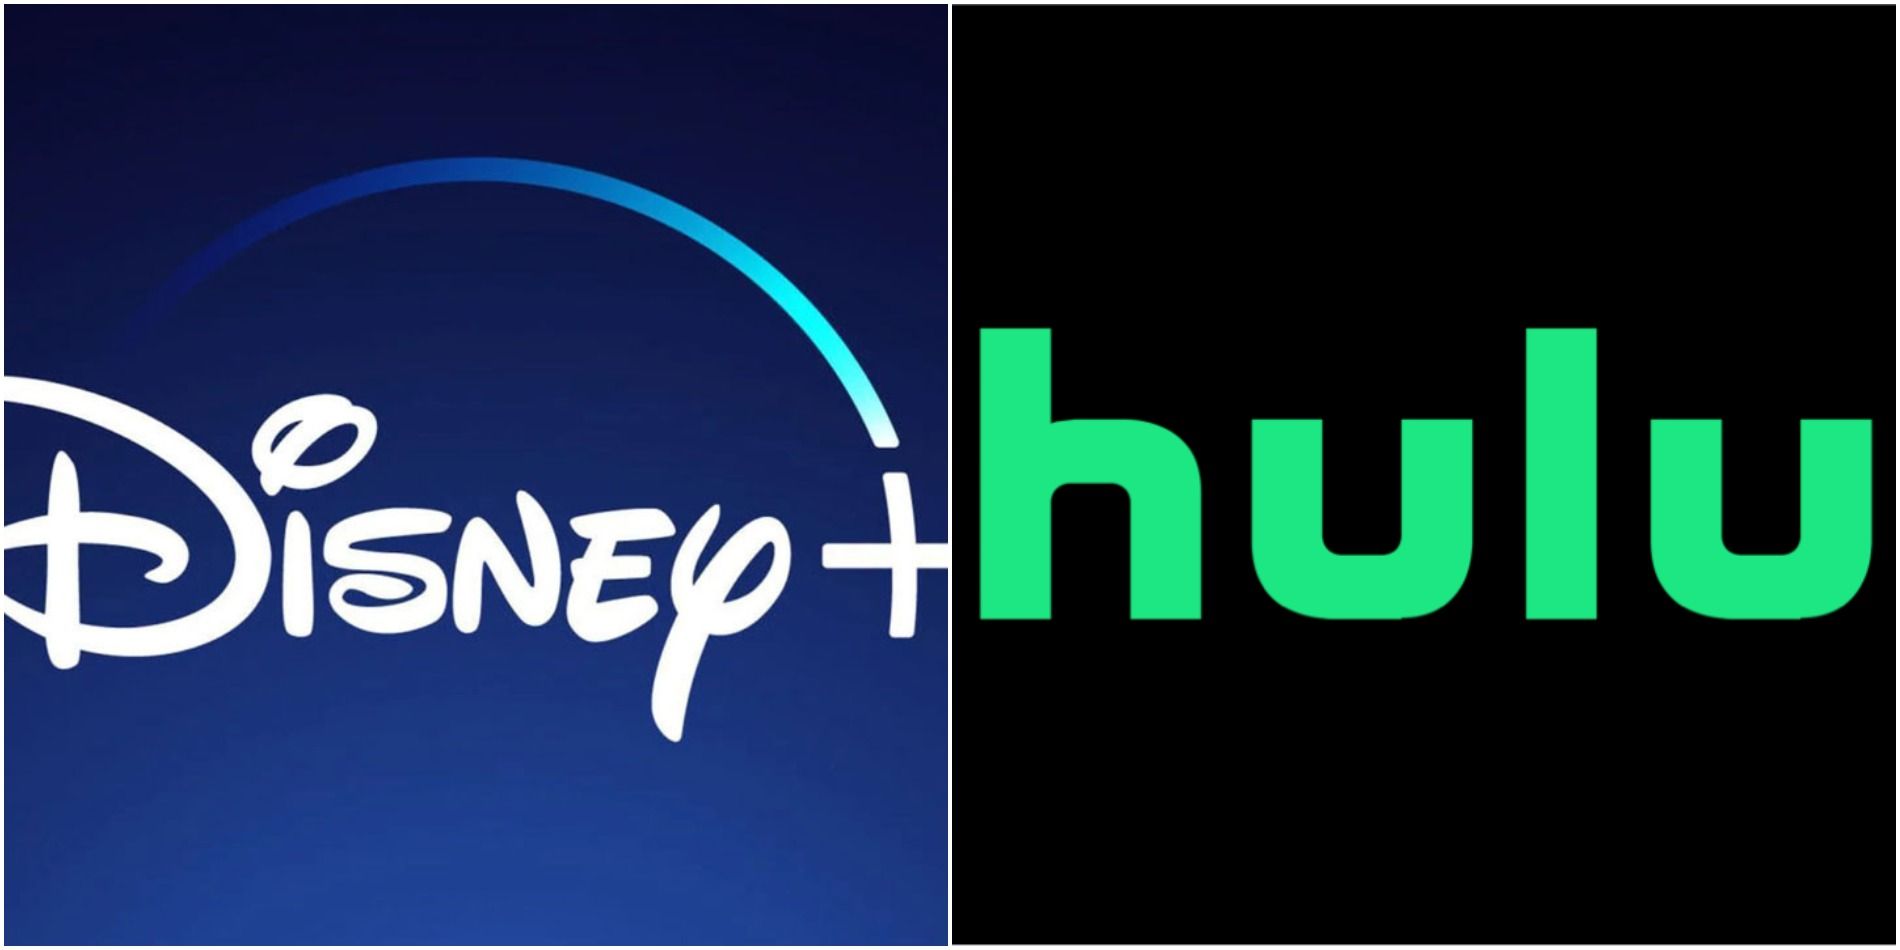 Logos for Disney+ and Hulu